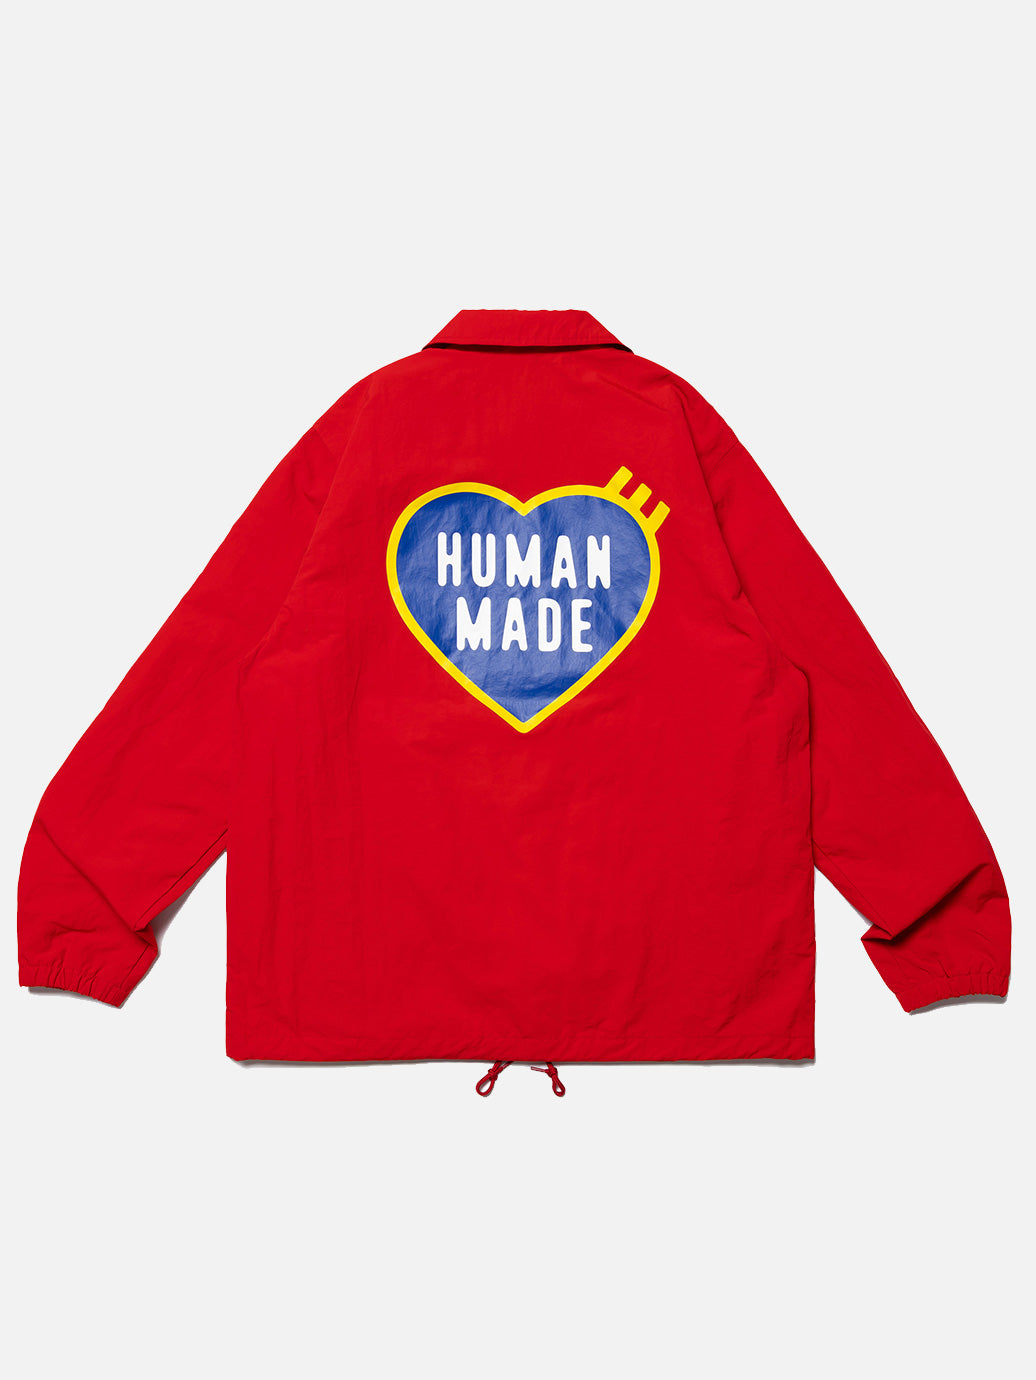 Human Made Coach Jacket – OALLERY